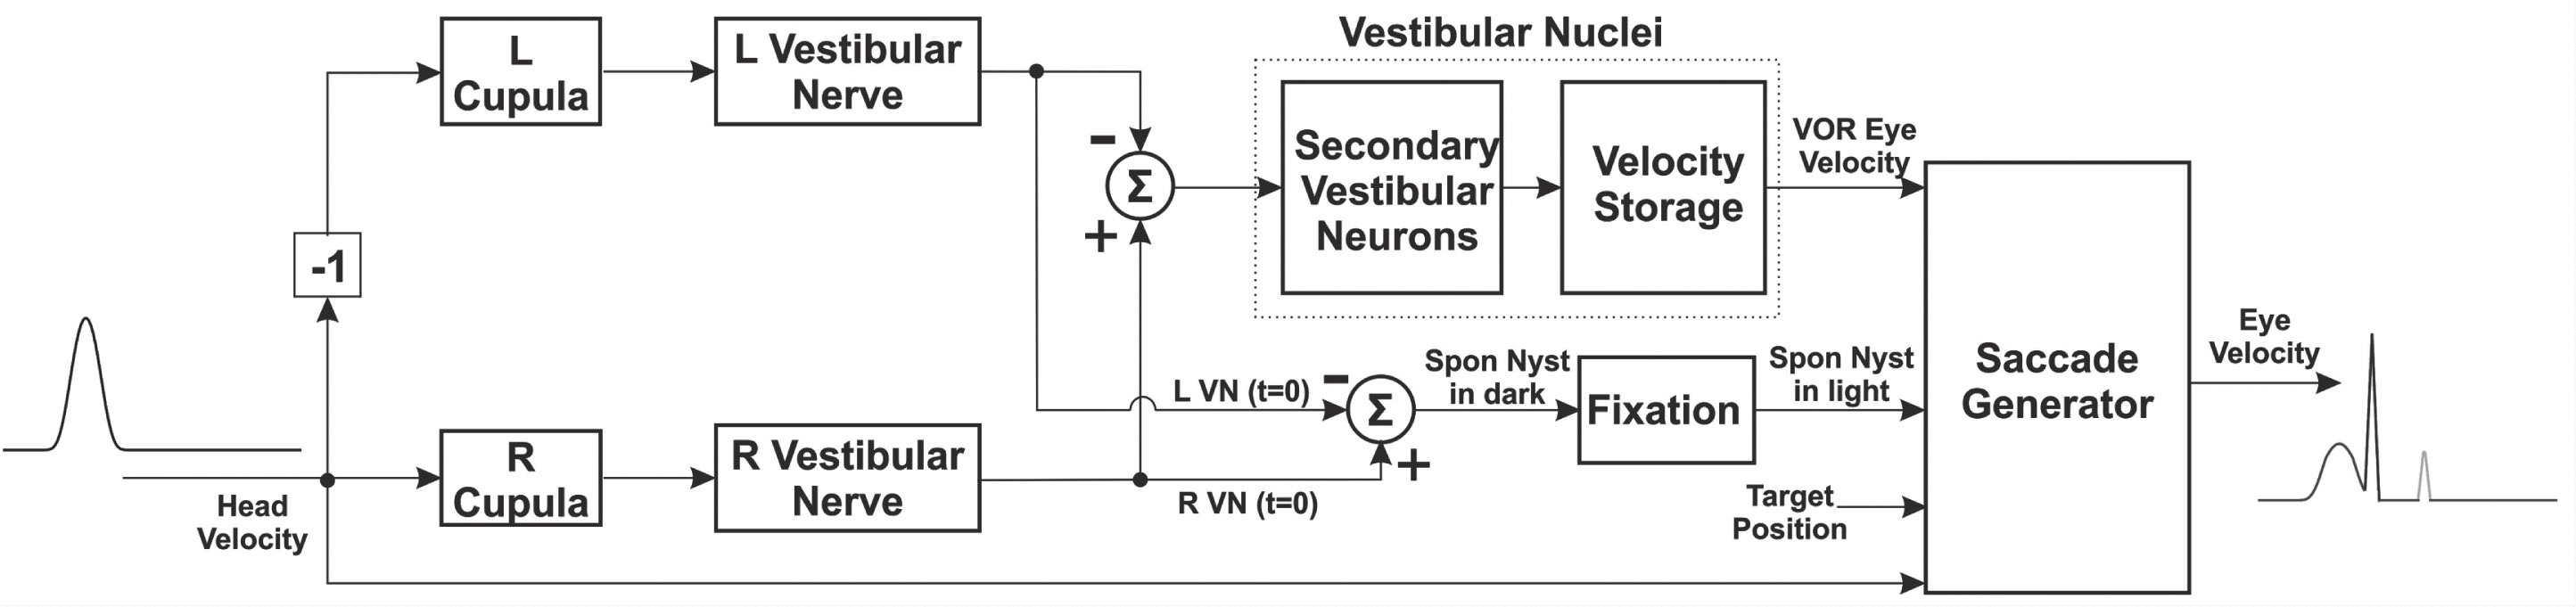 Schematic diagram of the VOR pathways.